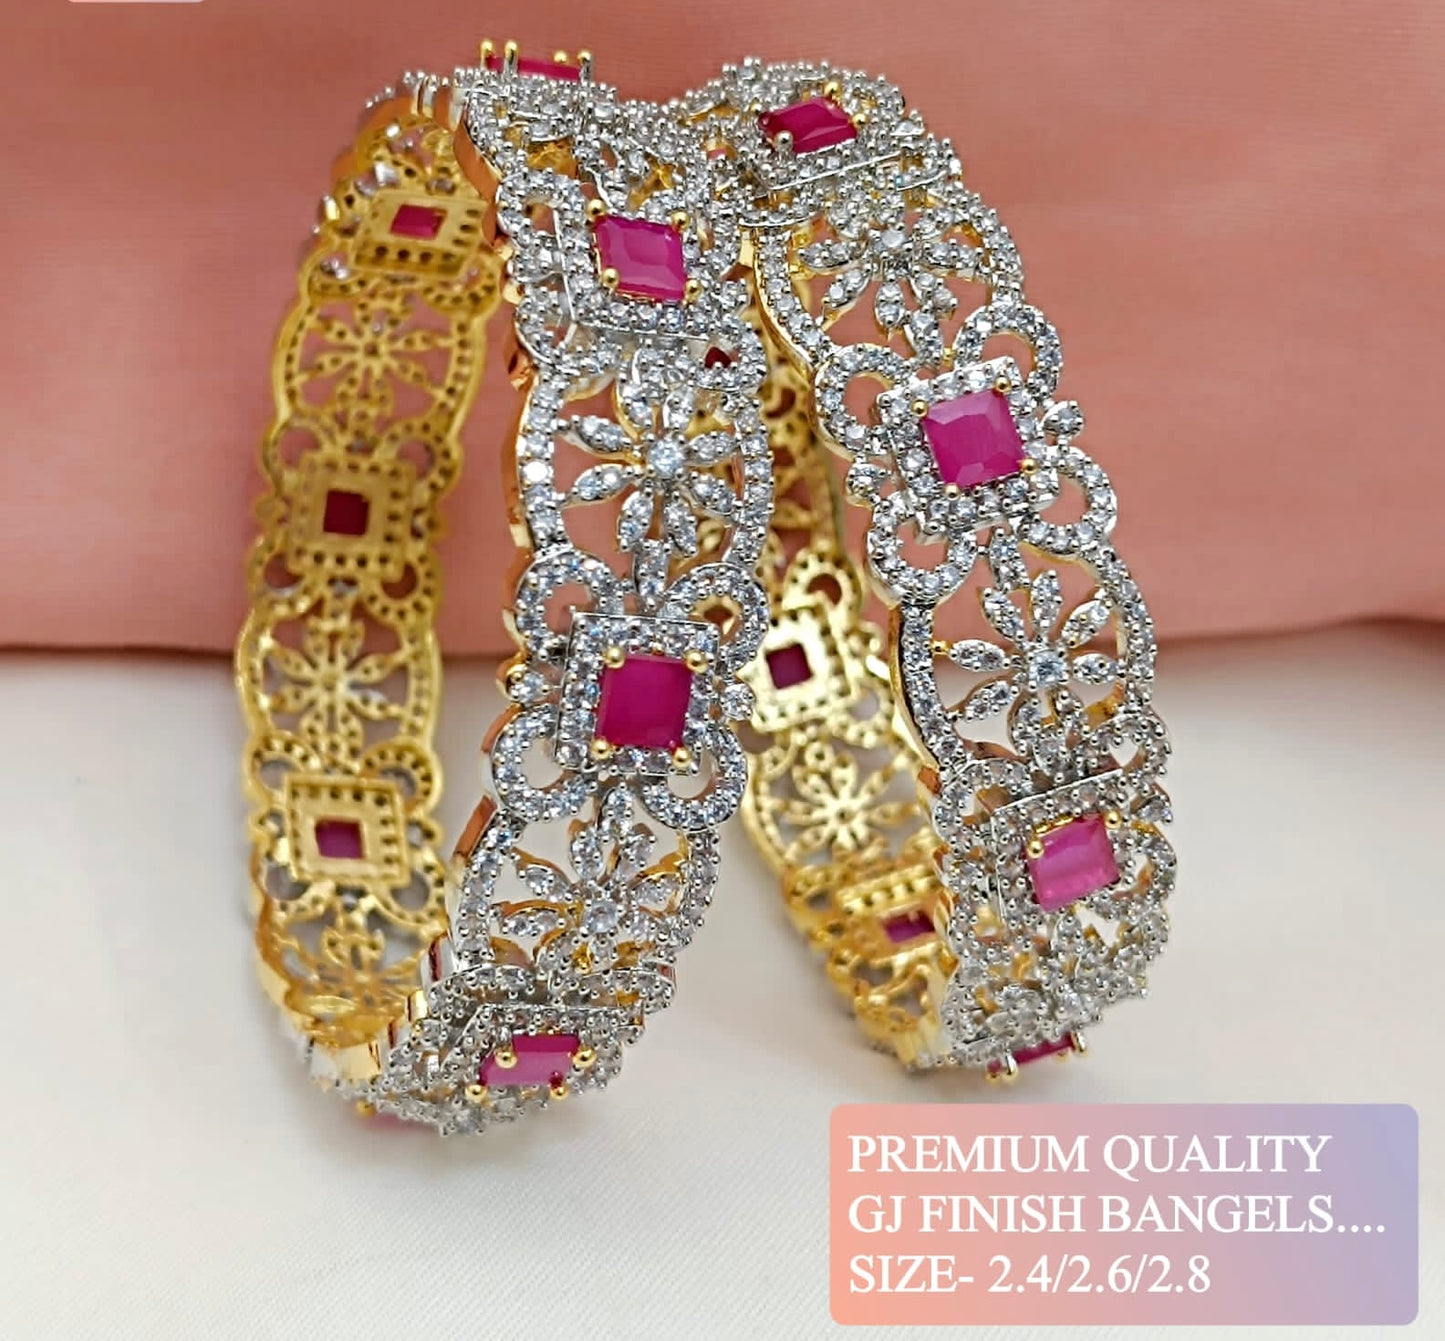 Beautiful Gj Polish Cz Bangles- Broad Pink Bangles -set of 2